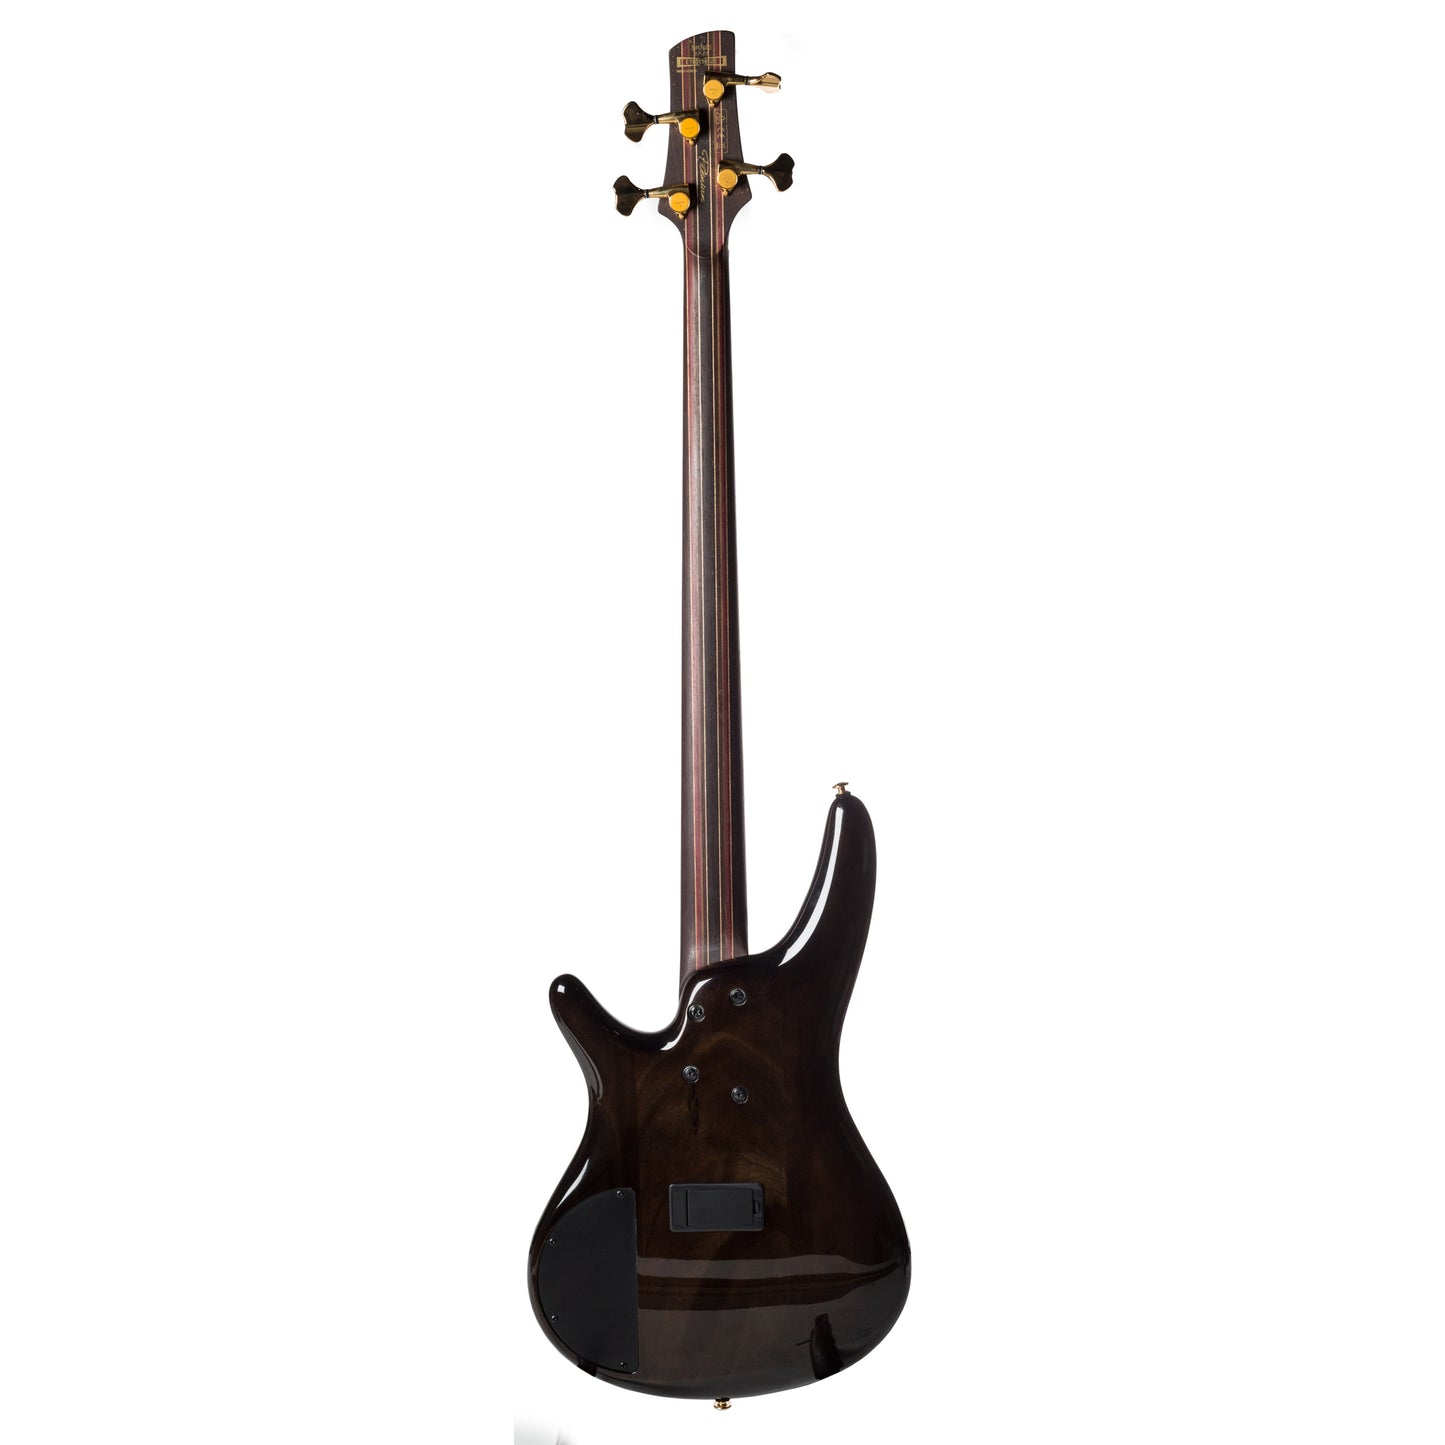 Ibanez SR2600ECBB Premium Soundgear 4 String Bass Guitar in Cerulean Blue Burst